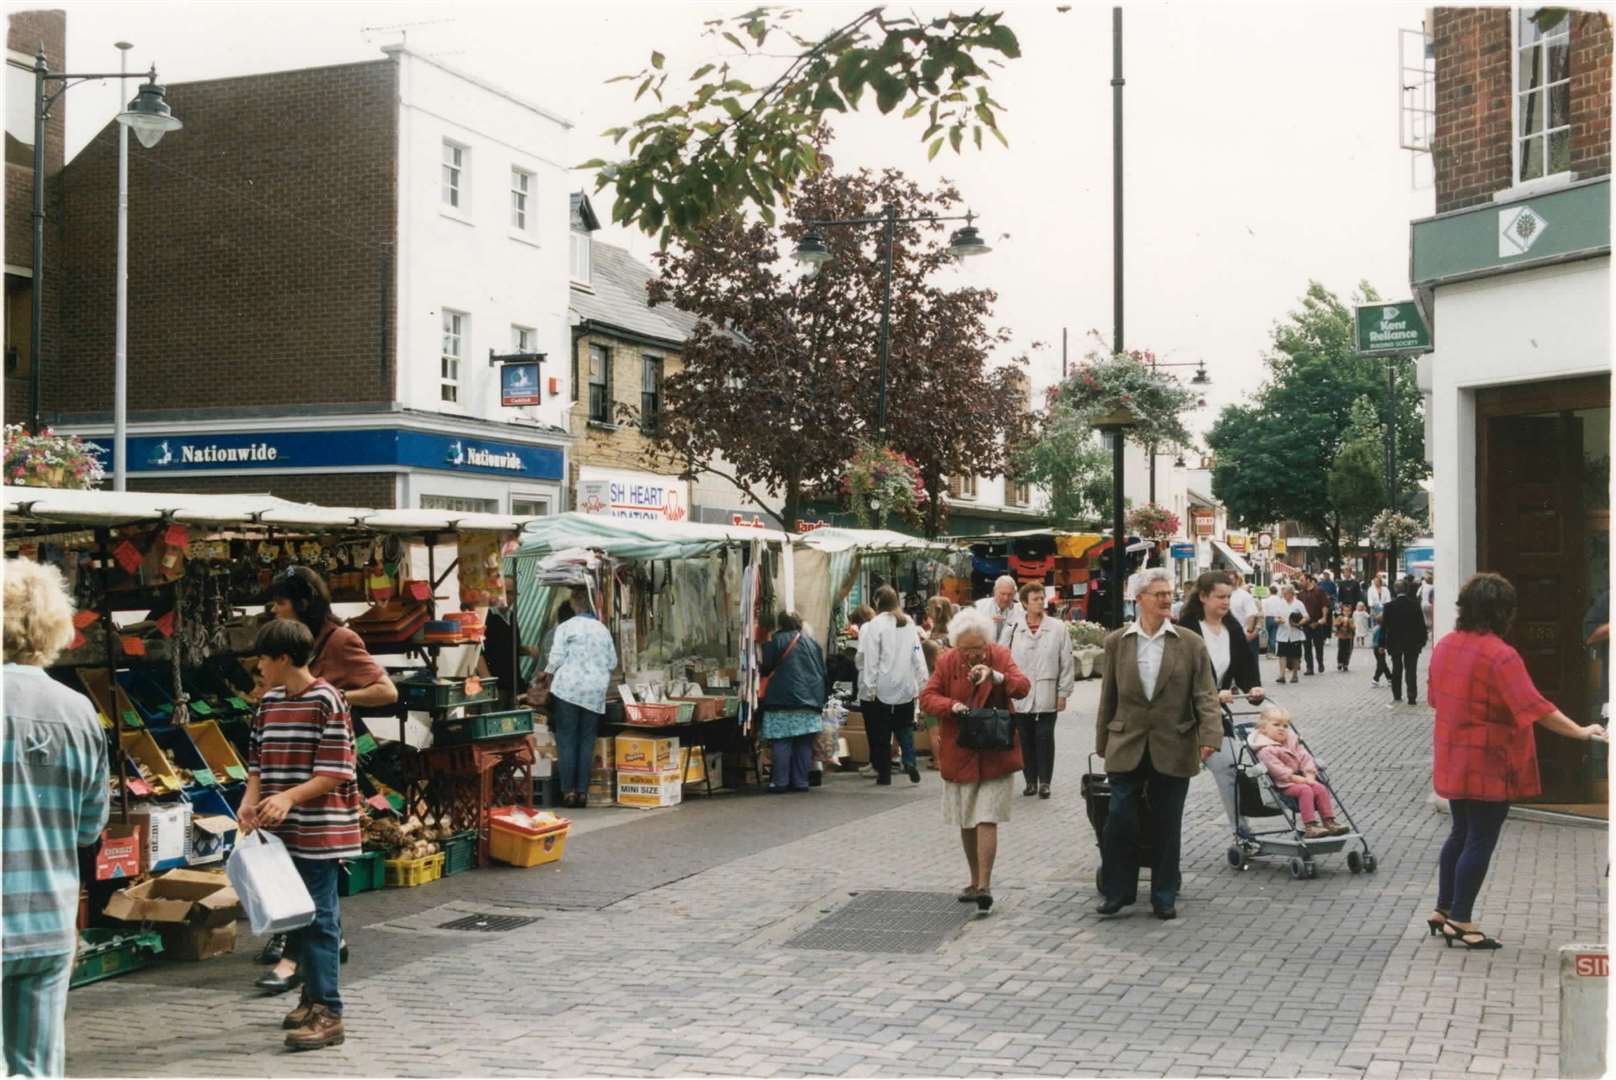 Market stalls in Gillingham High Street in 1997